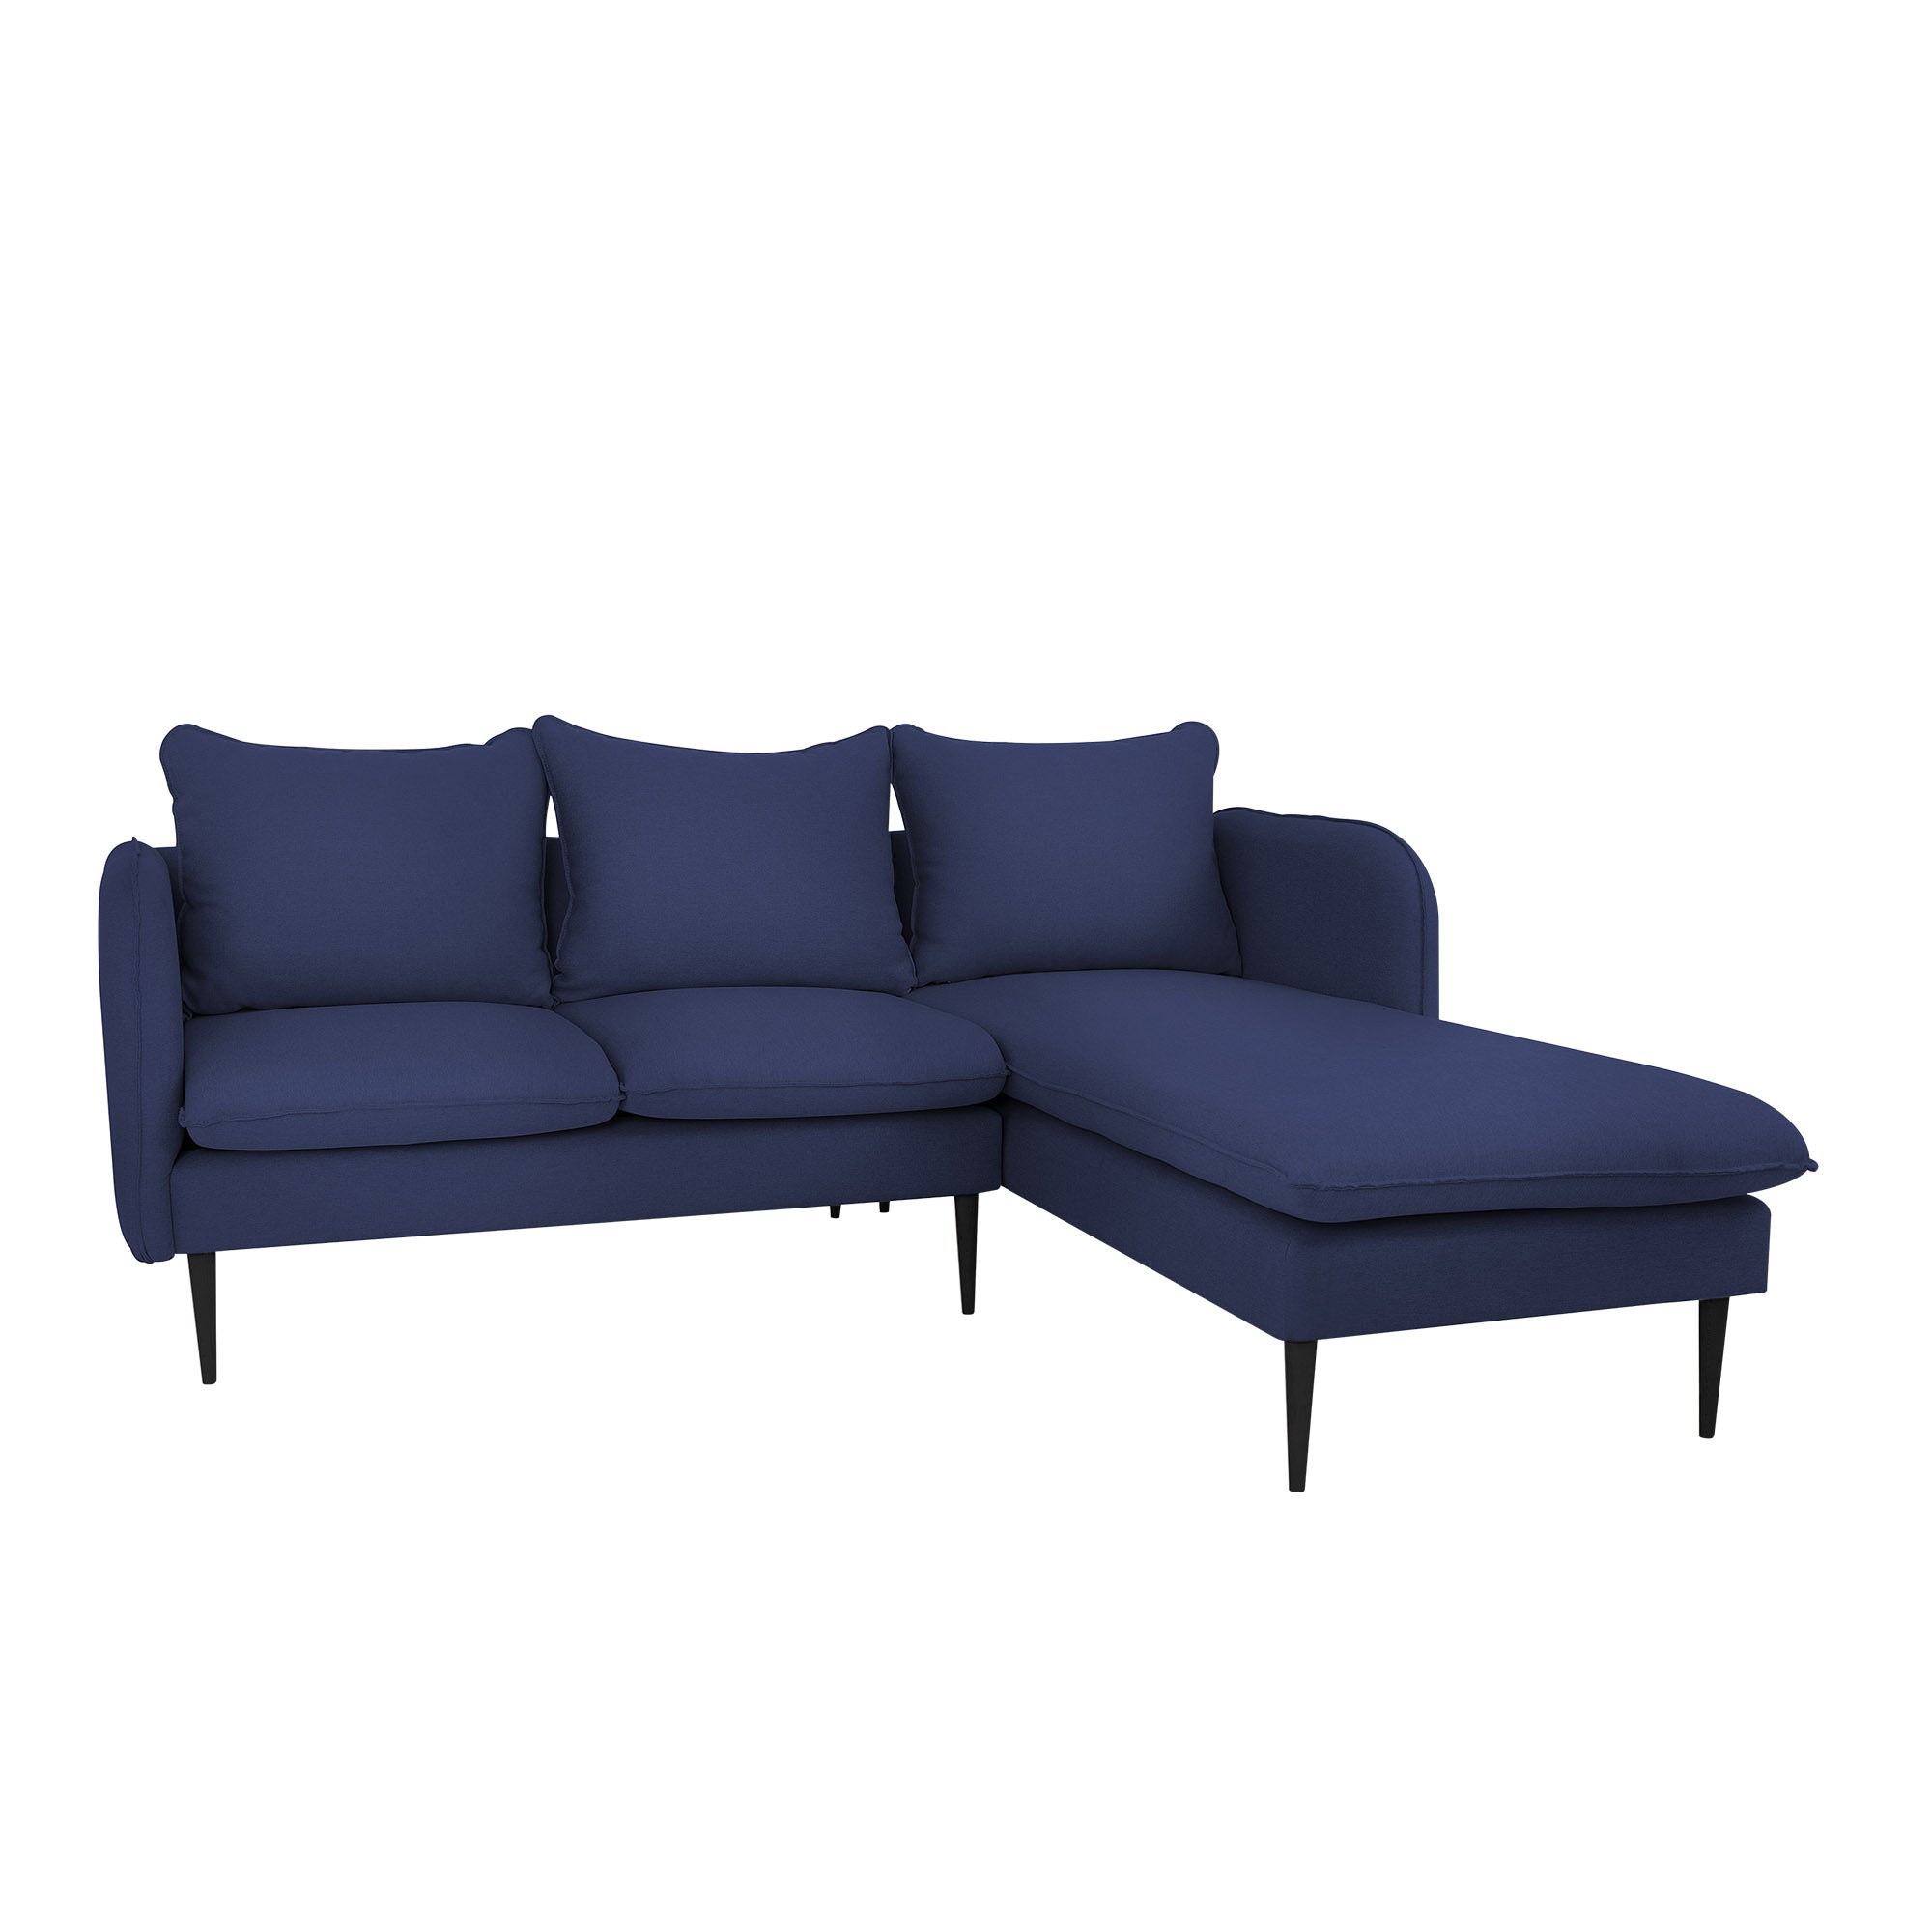 POSH BLACK Corner Sofa Right upholstery colour blue